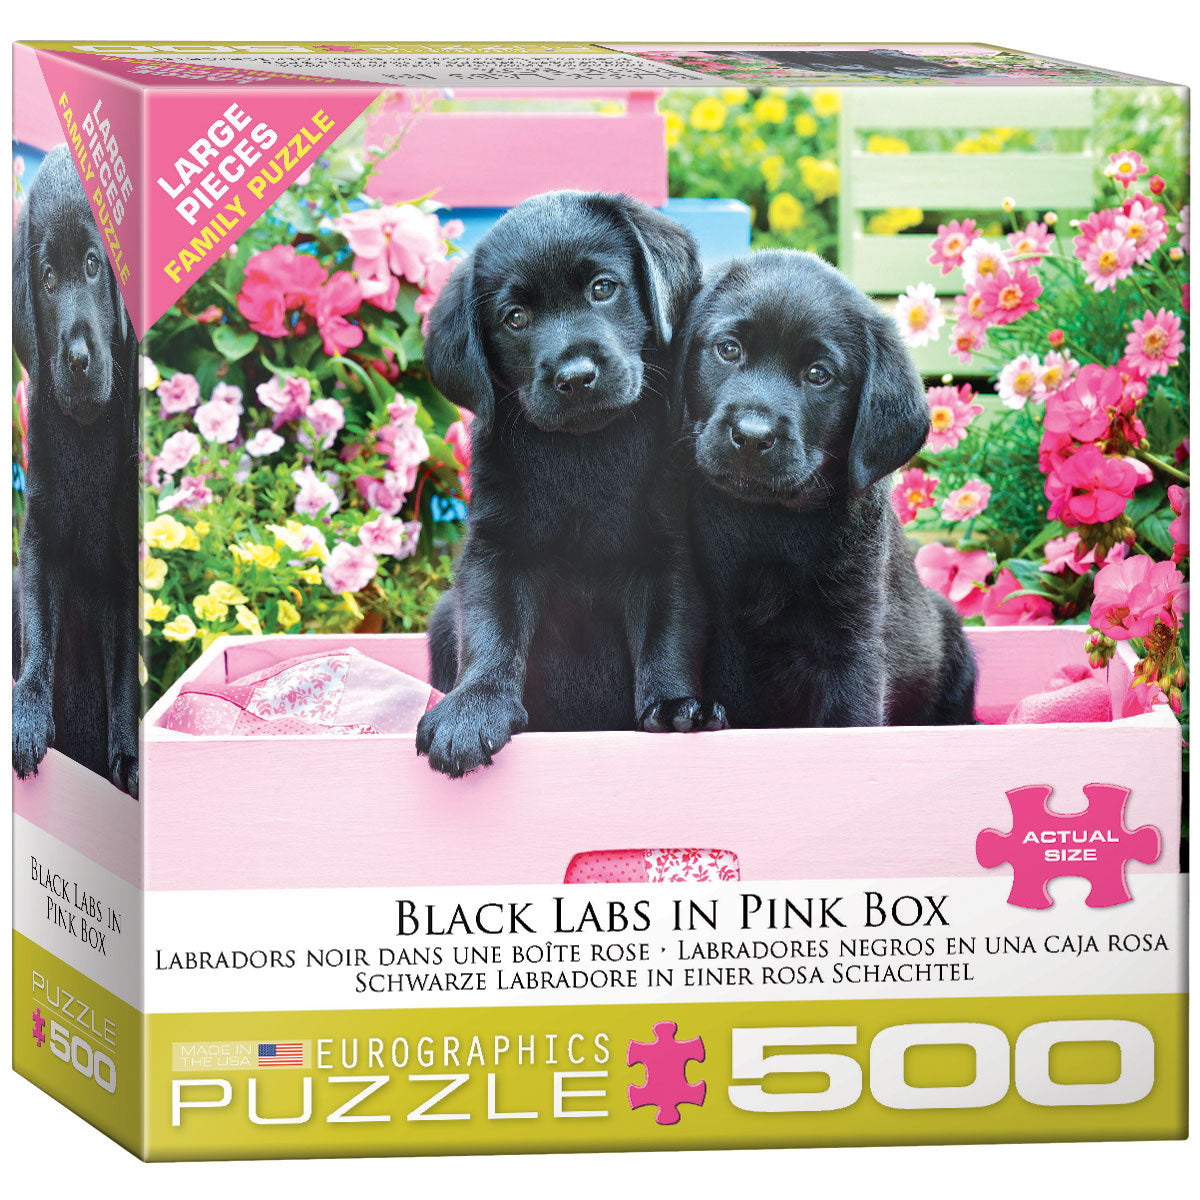 Black Labs in Pink Box 500 Piece Puzzle - Quick Ship - Puzzlicious.com